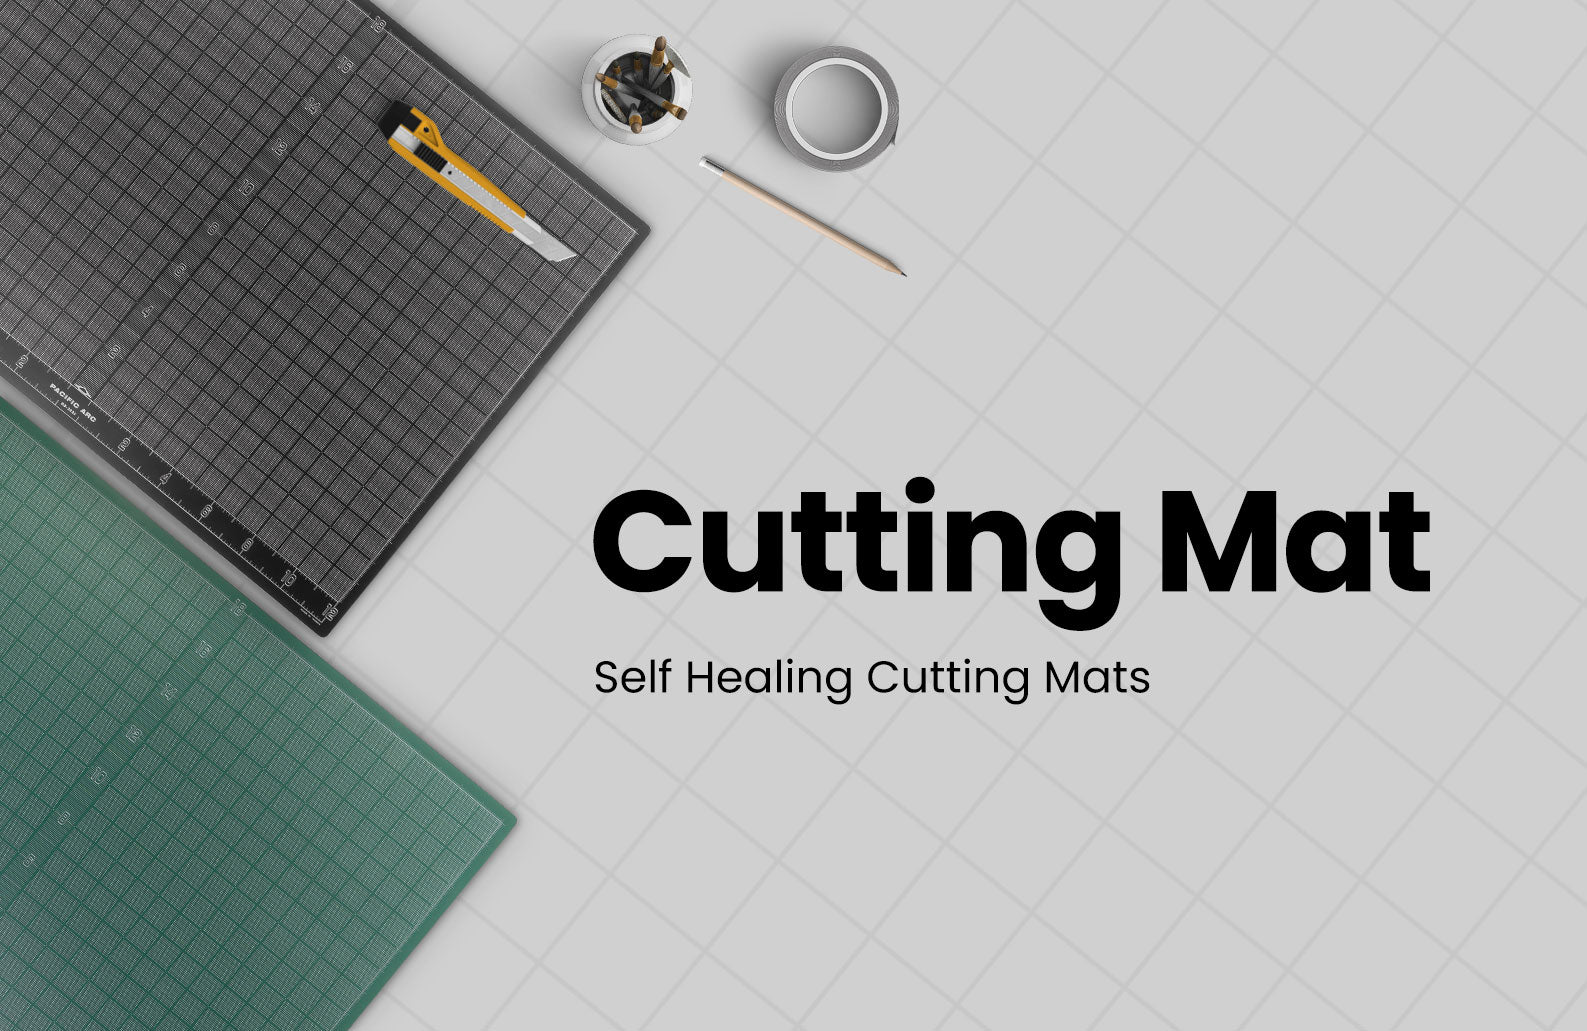 Pacific Arc GB0912 Cutting Mat 9x12 Black / Green Self Healing